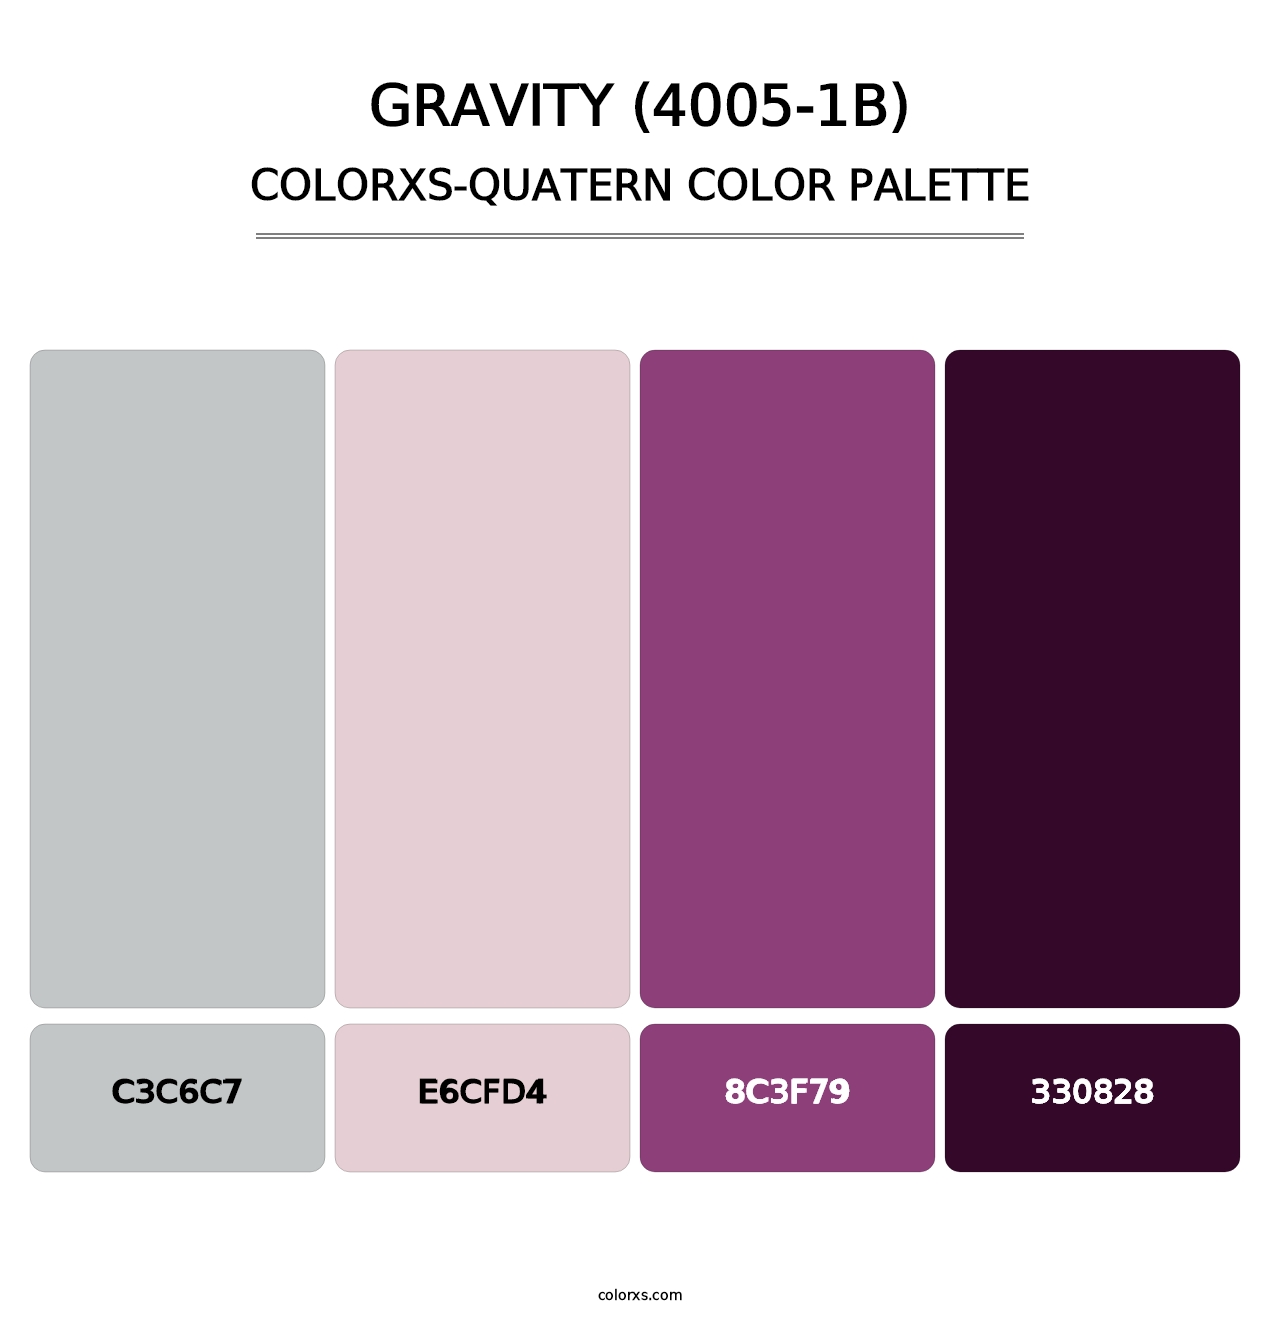 Gravity (4005-1B) - Colorxs Quatern Palette